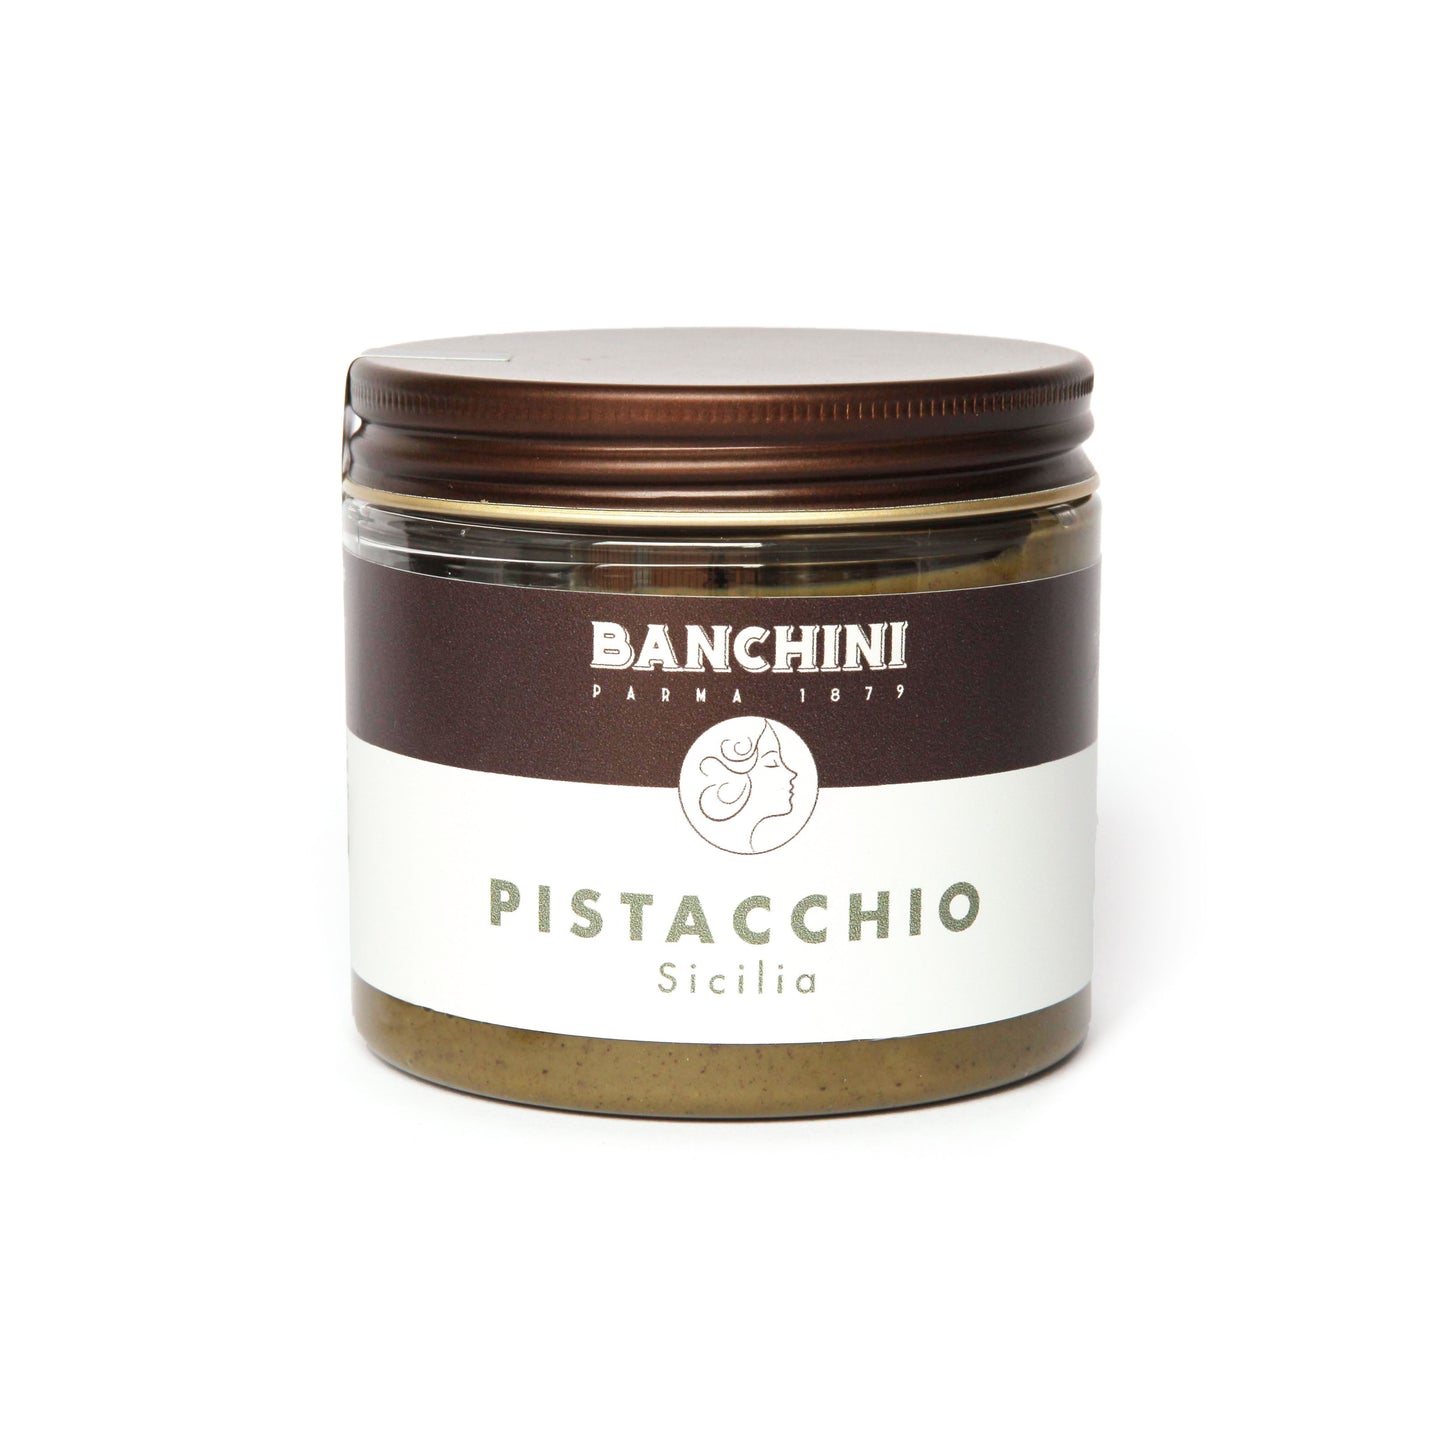 Sicilian Pistachio Spread